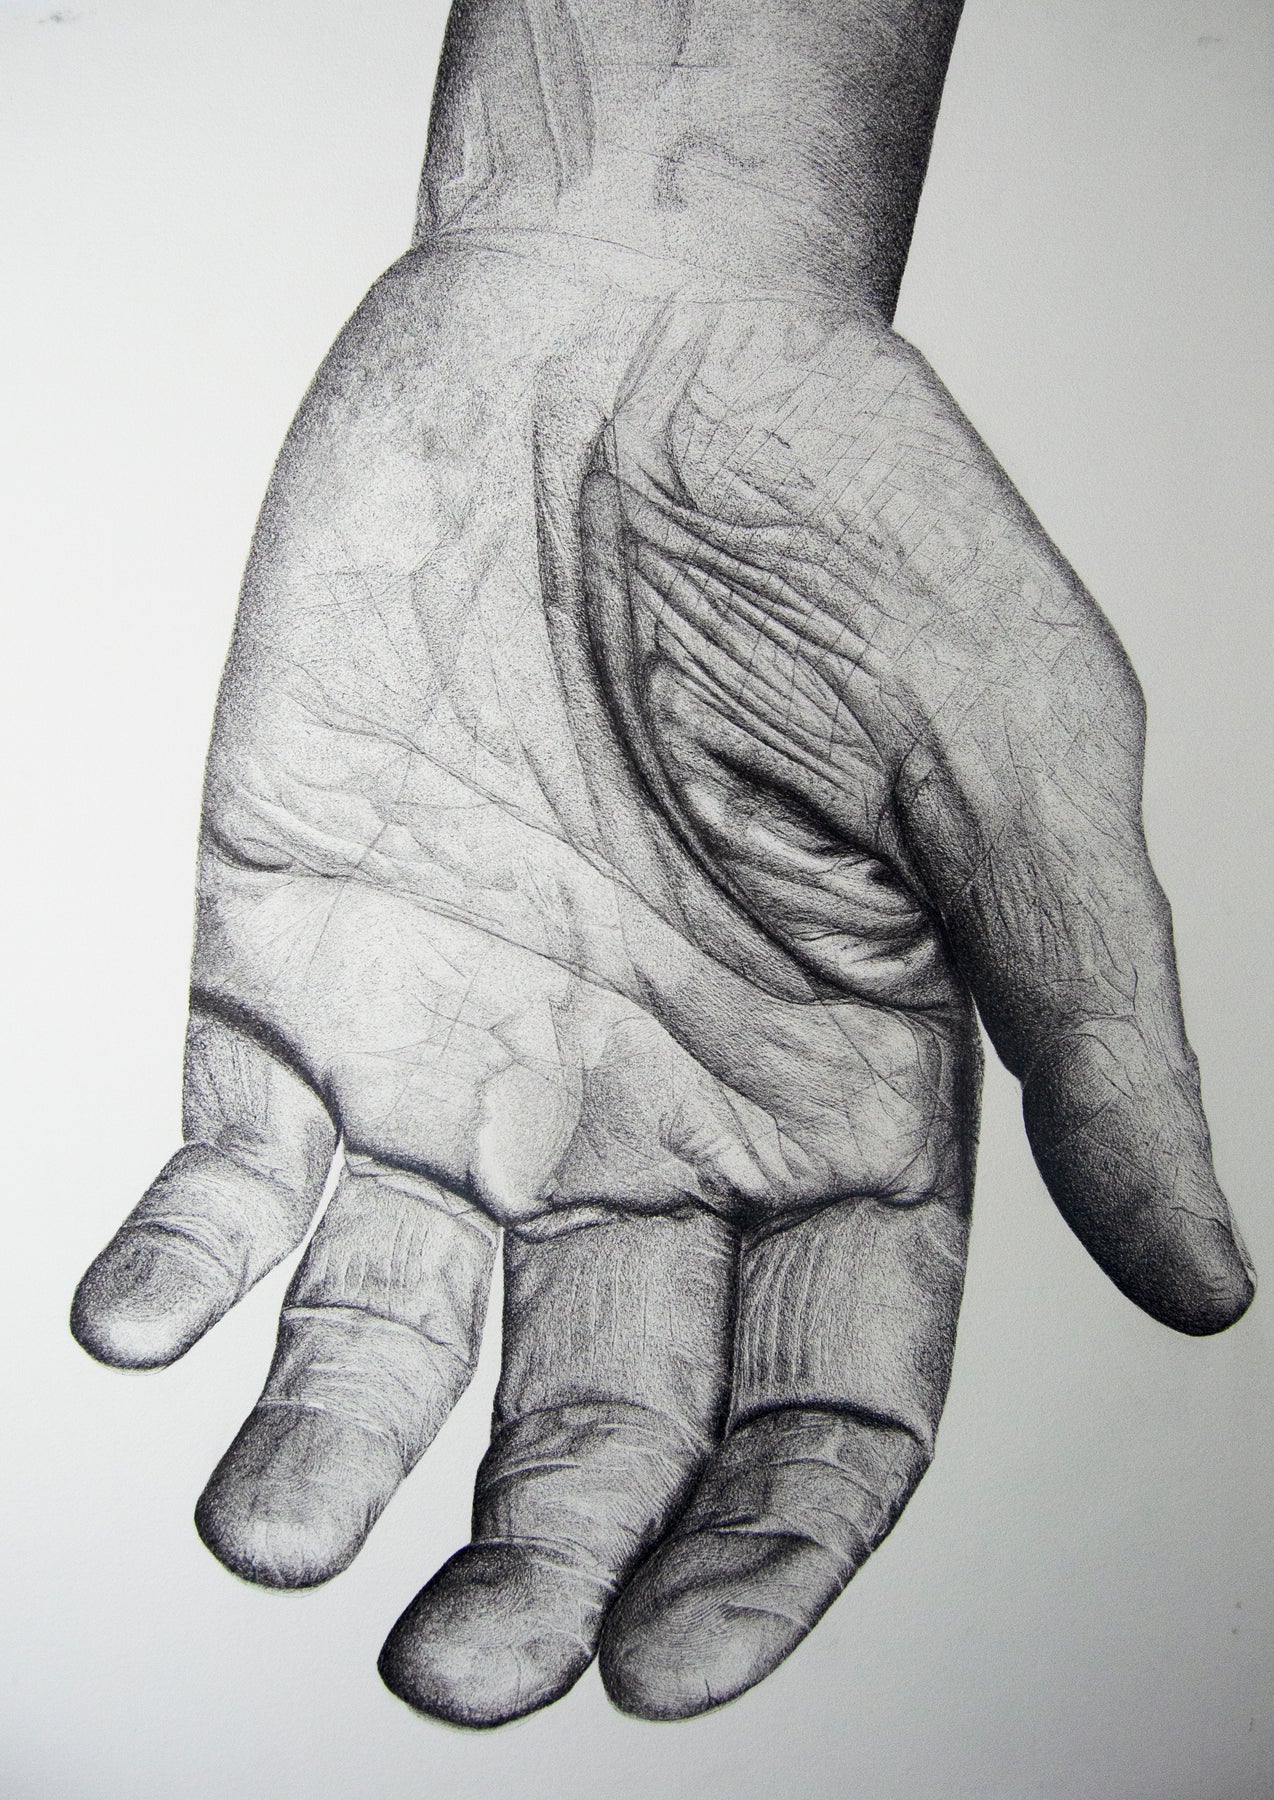 Untitled (Hand)